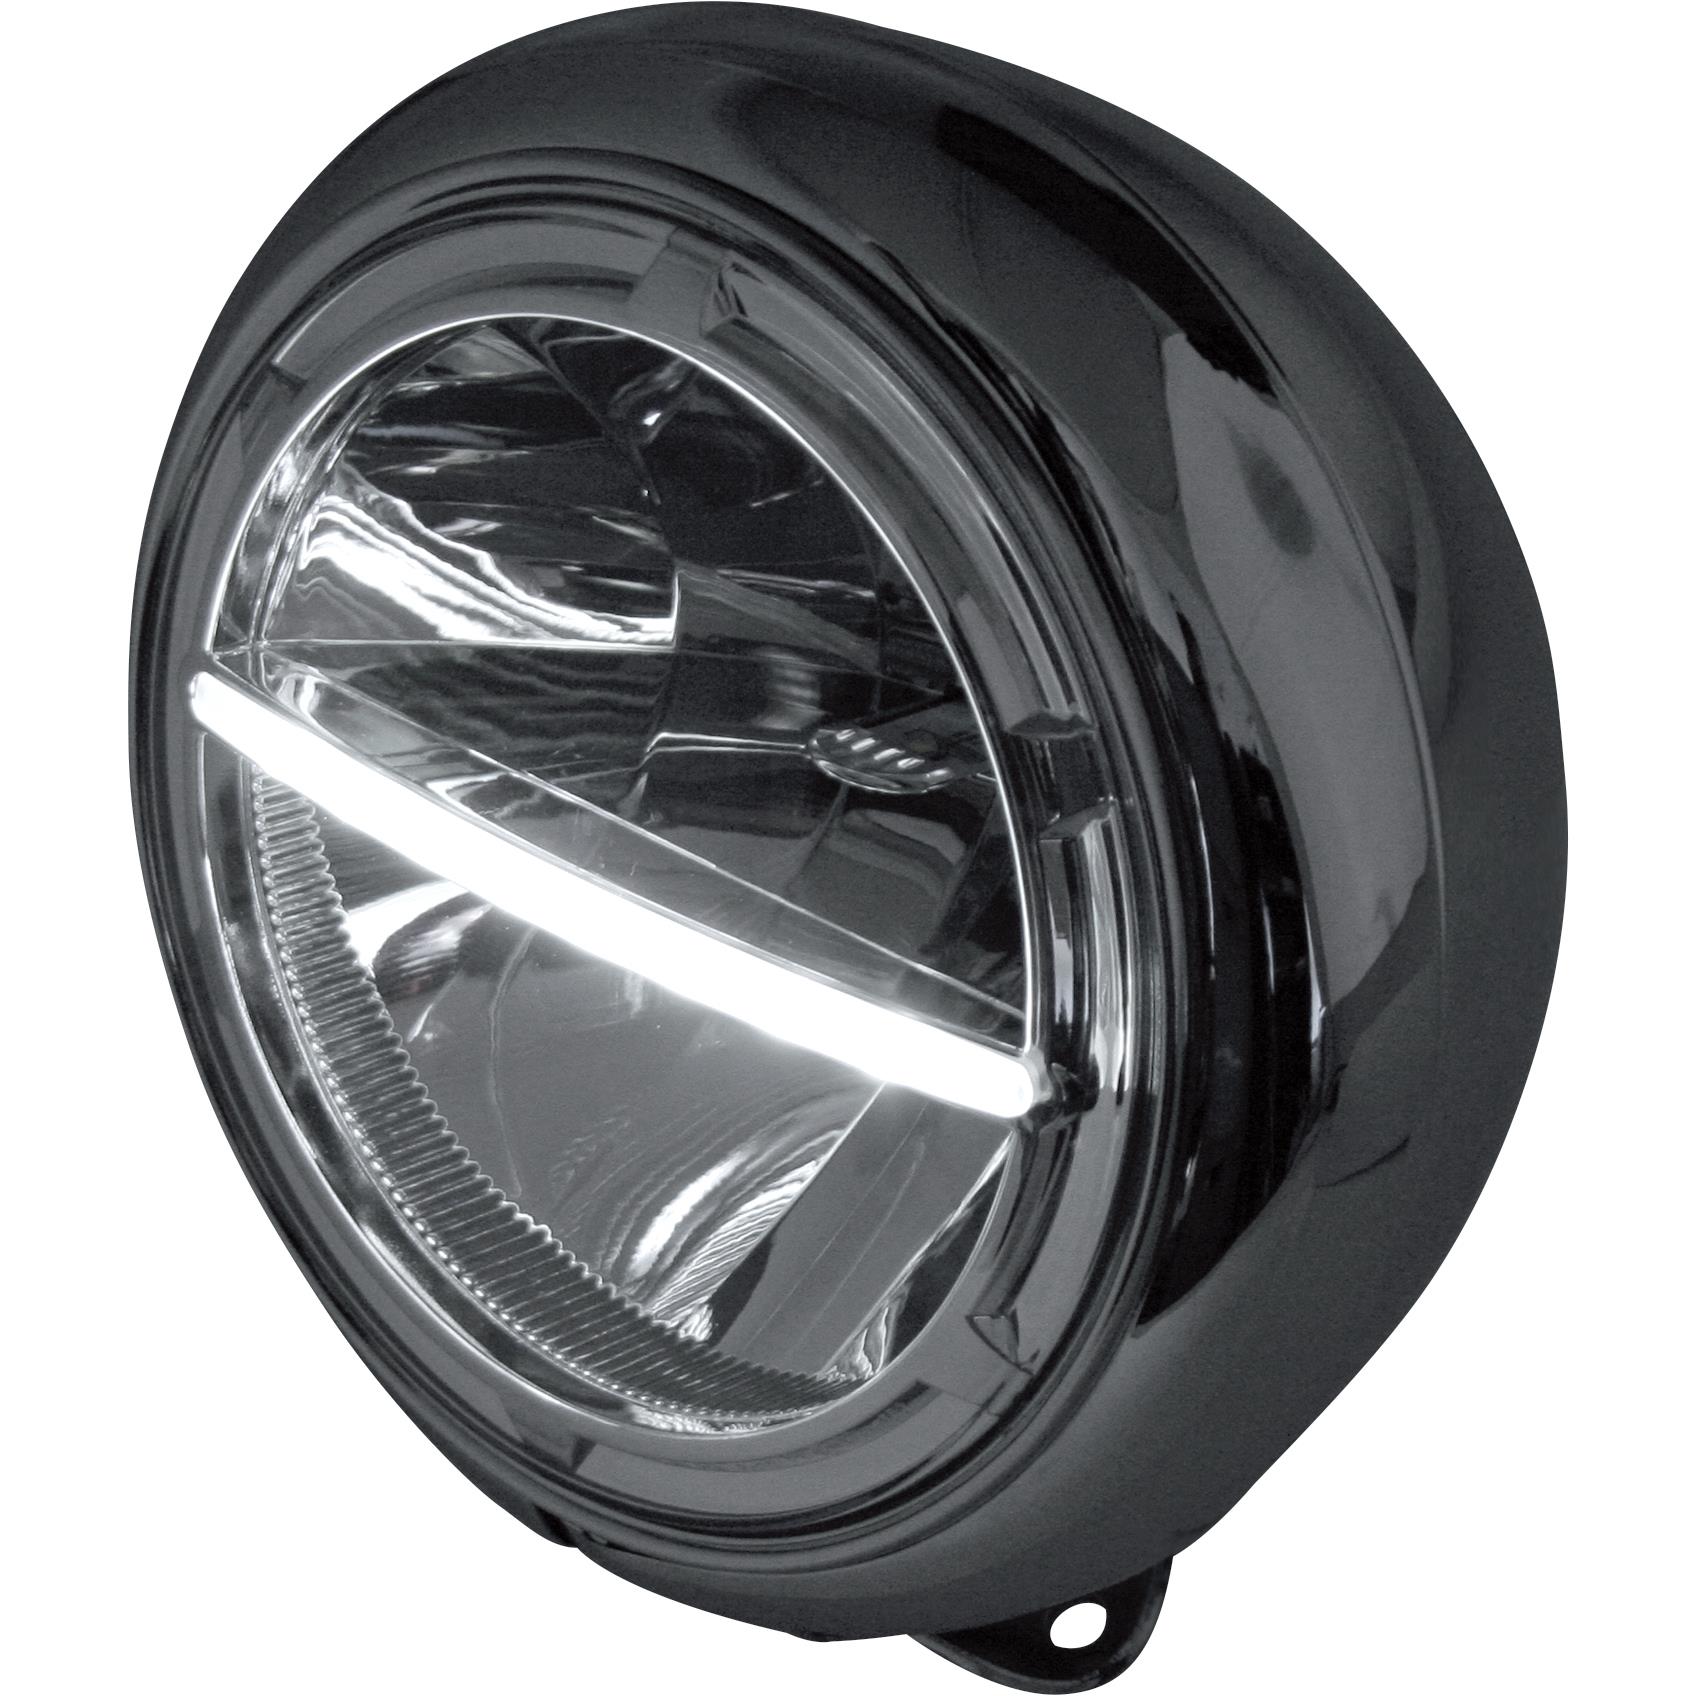 Voyage LED headlight 205 mm Harley chrome